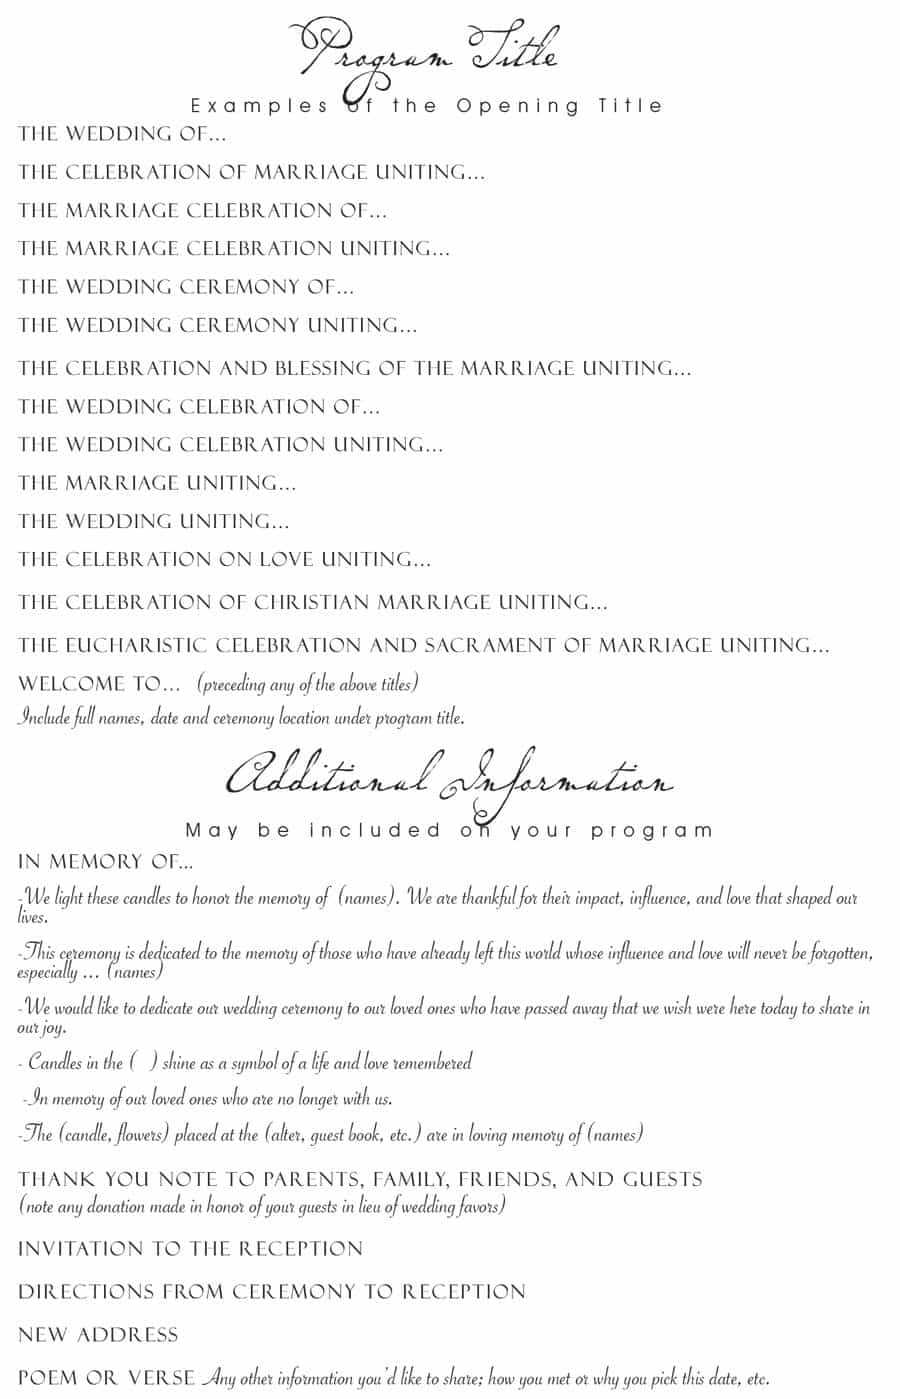 37 Printable Wedding Program Examples & Templates ᐅ Templatelab With Free Printable Wedding Program Templates Word